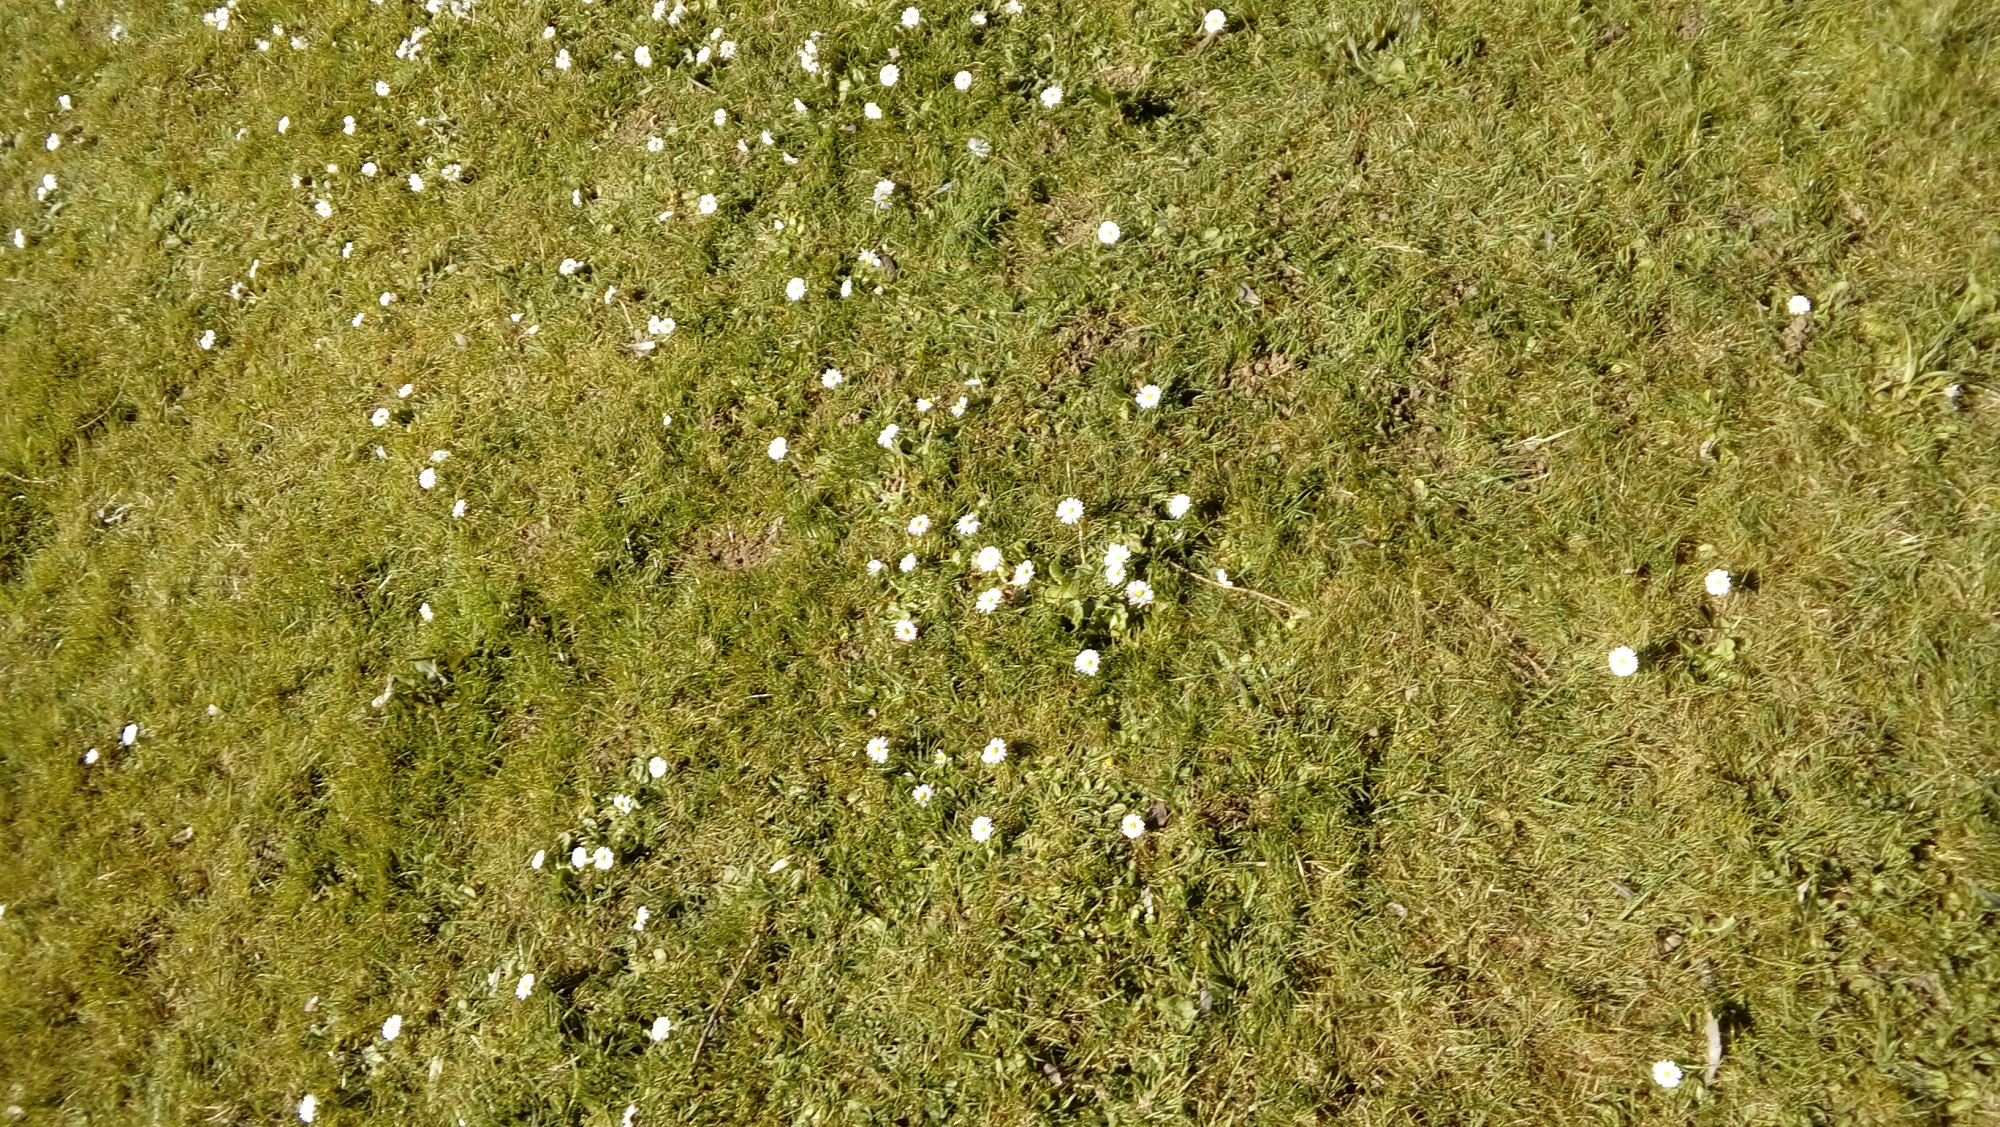 Spring daisies on short grass sunny